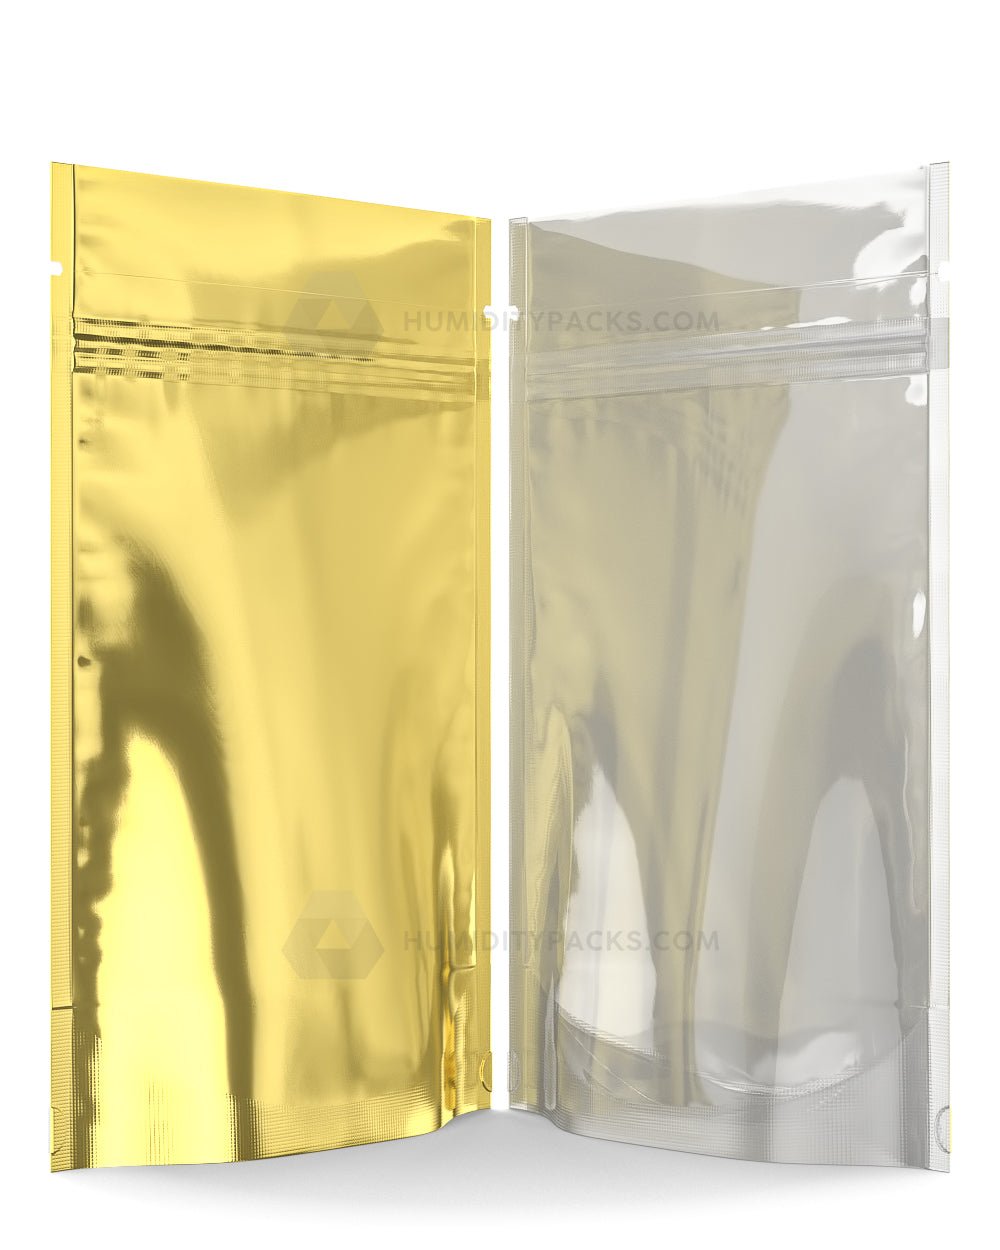 Glossy-Gold 5" x 8.1" Vista Mylar Tamper Evident Bags (14 gram) 1000/Box Humidity Packs - 2